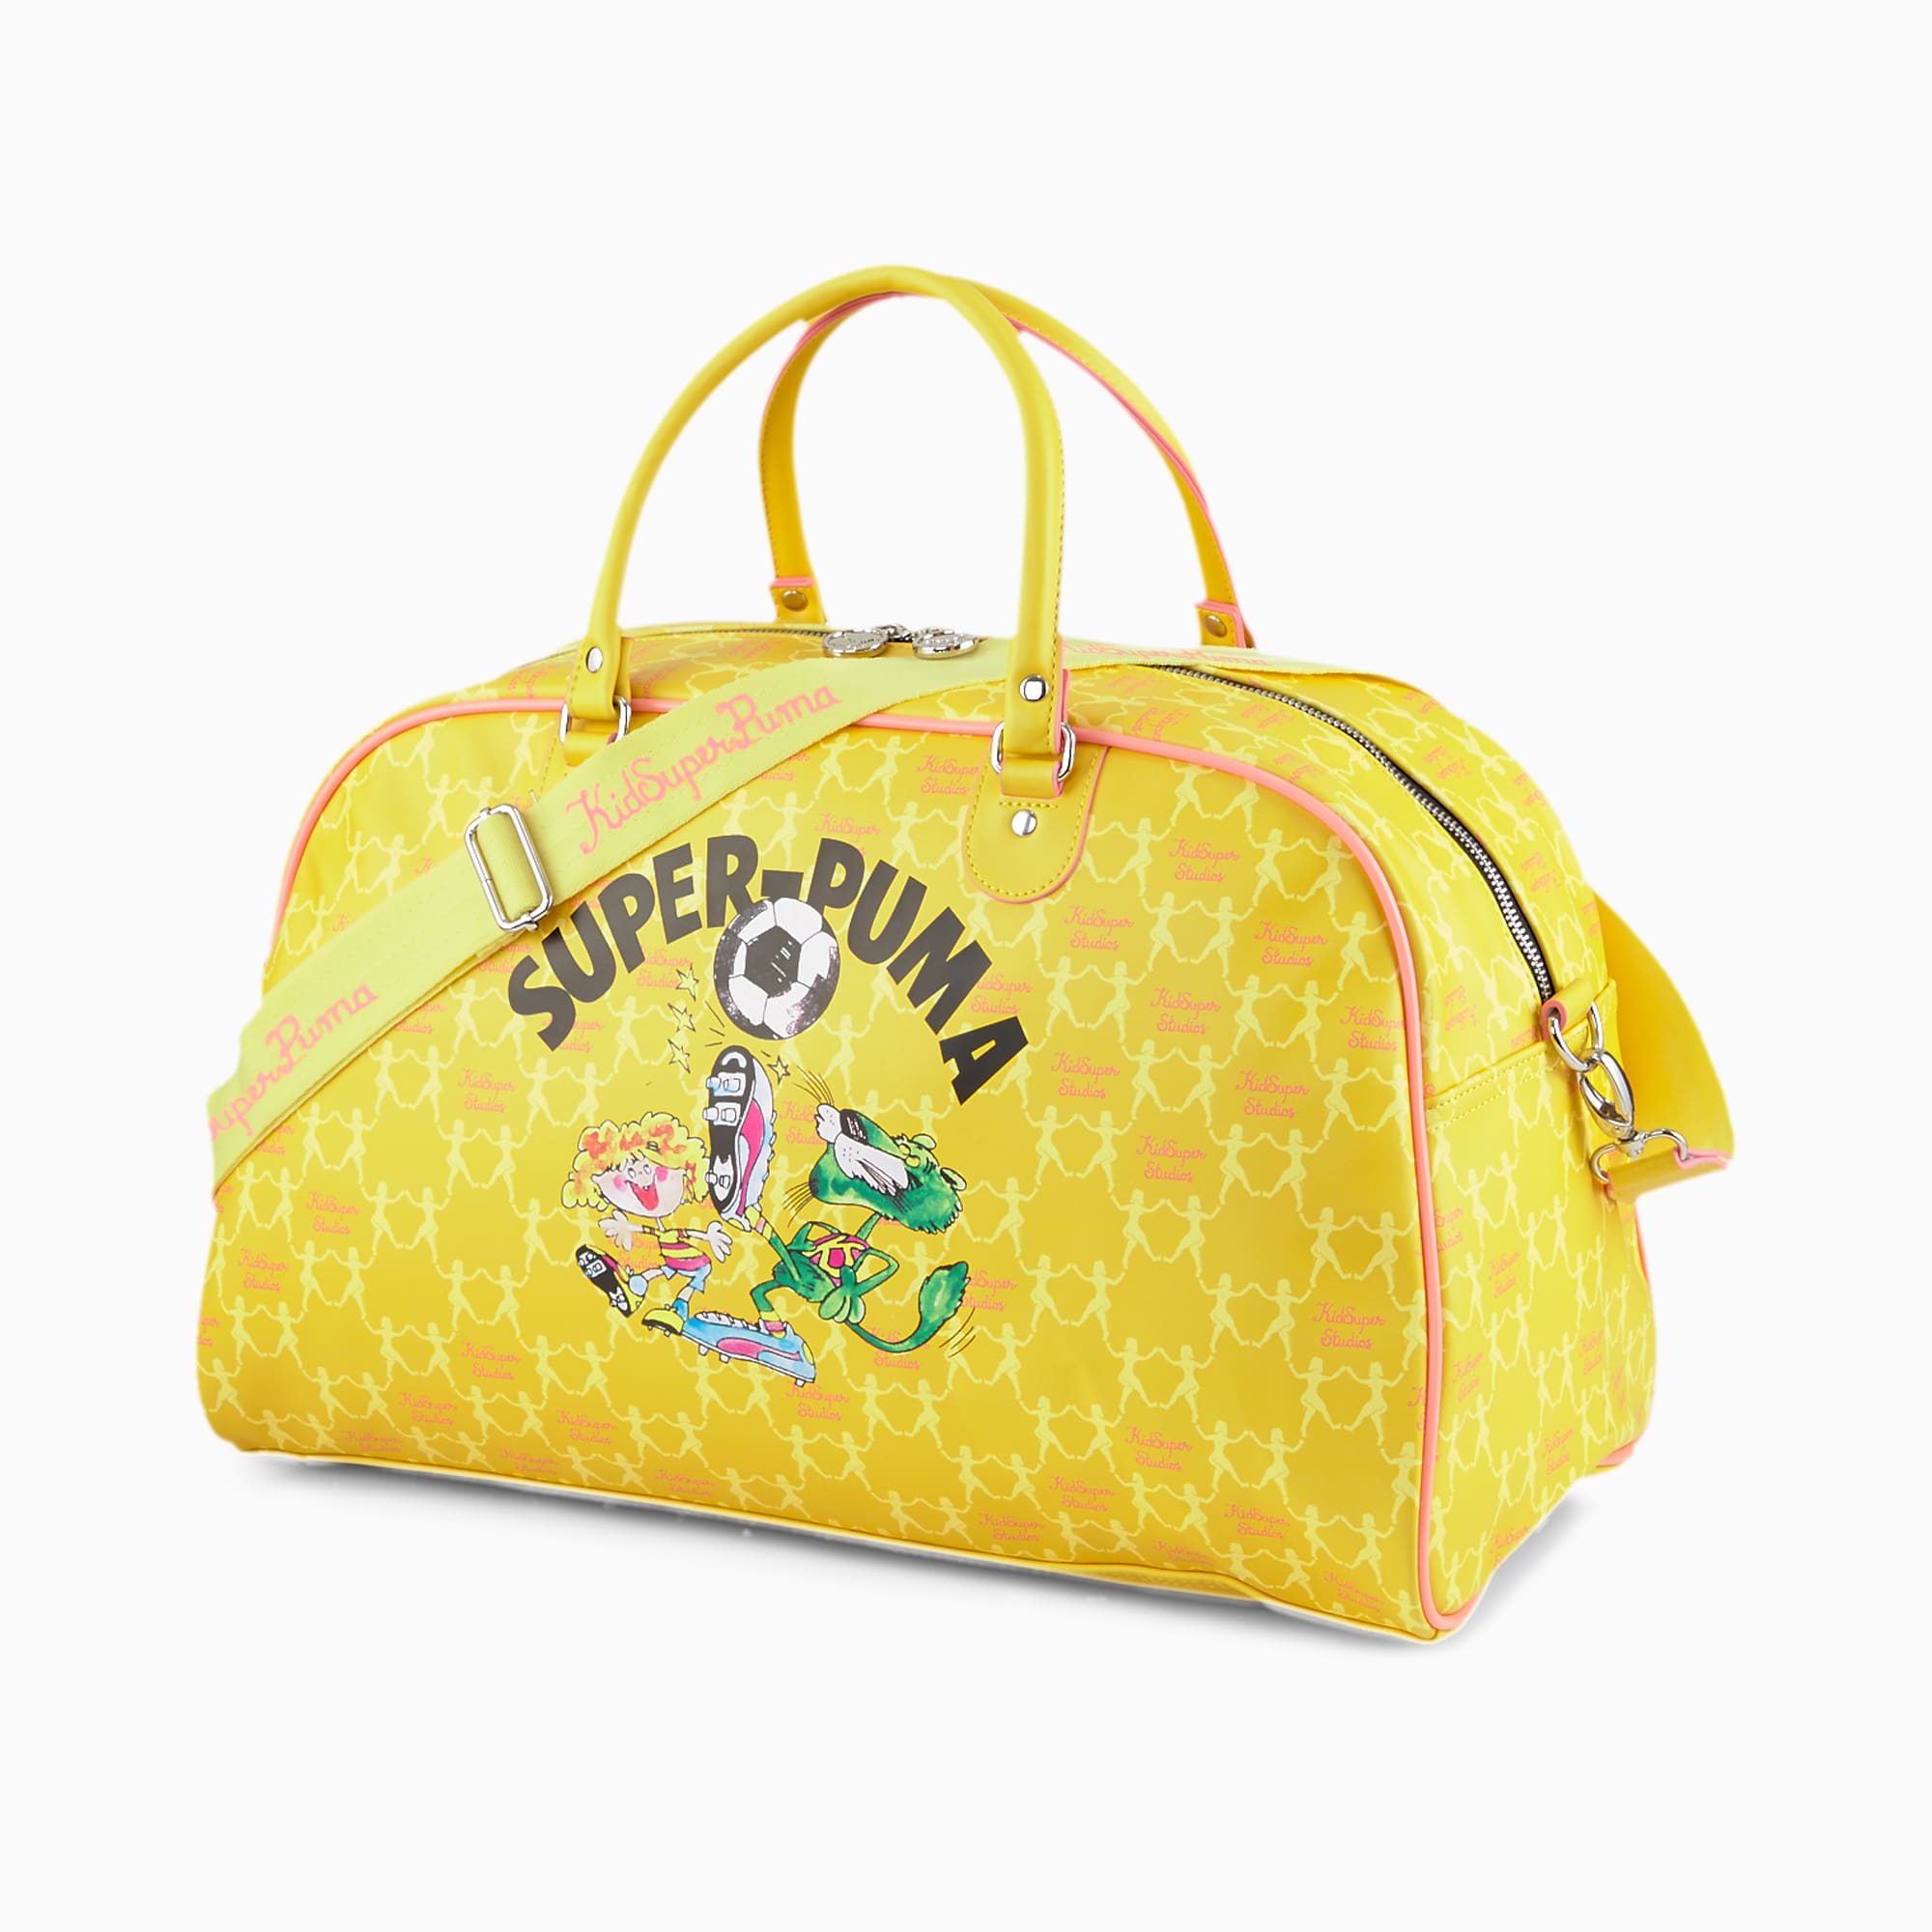 puma ferrari handbag yellow